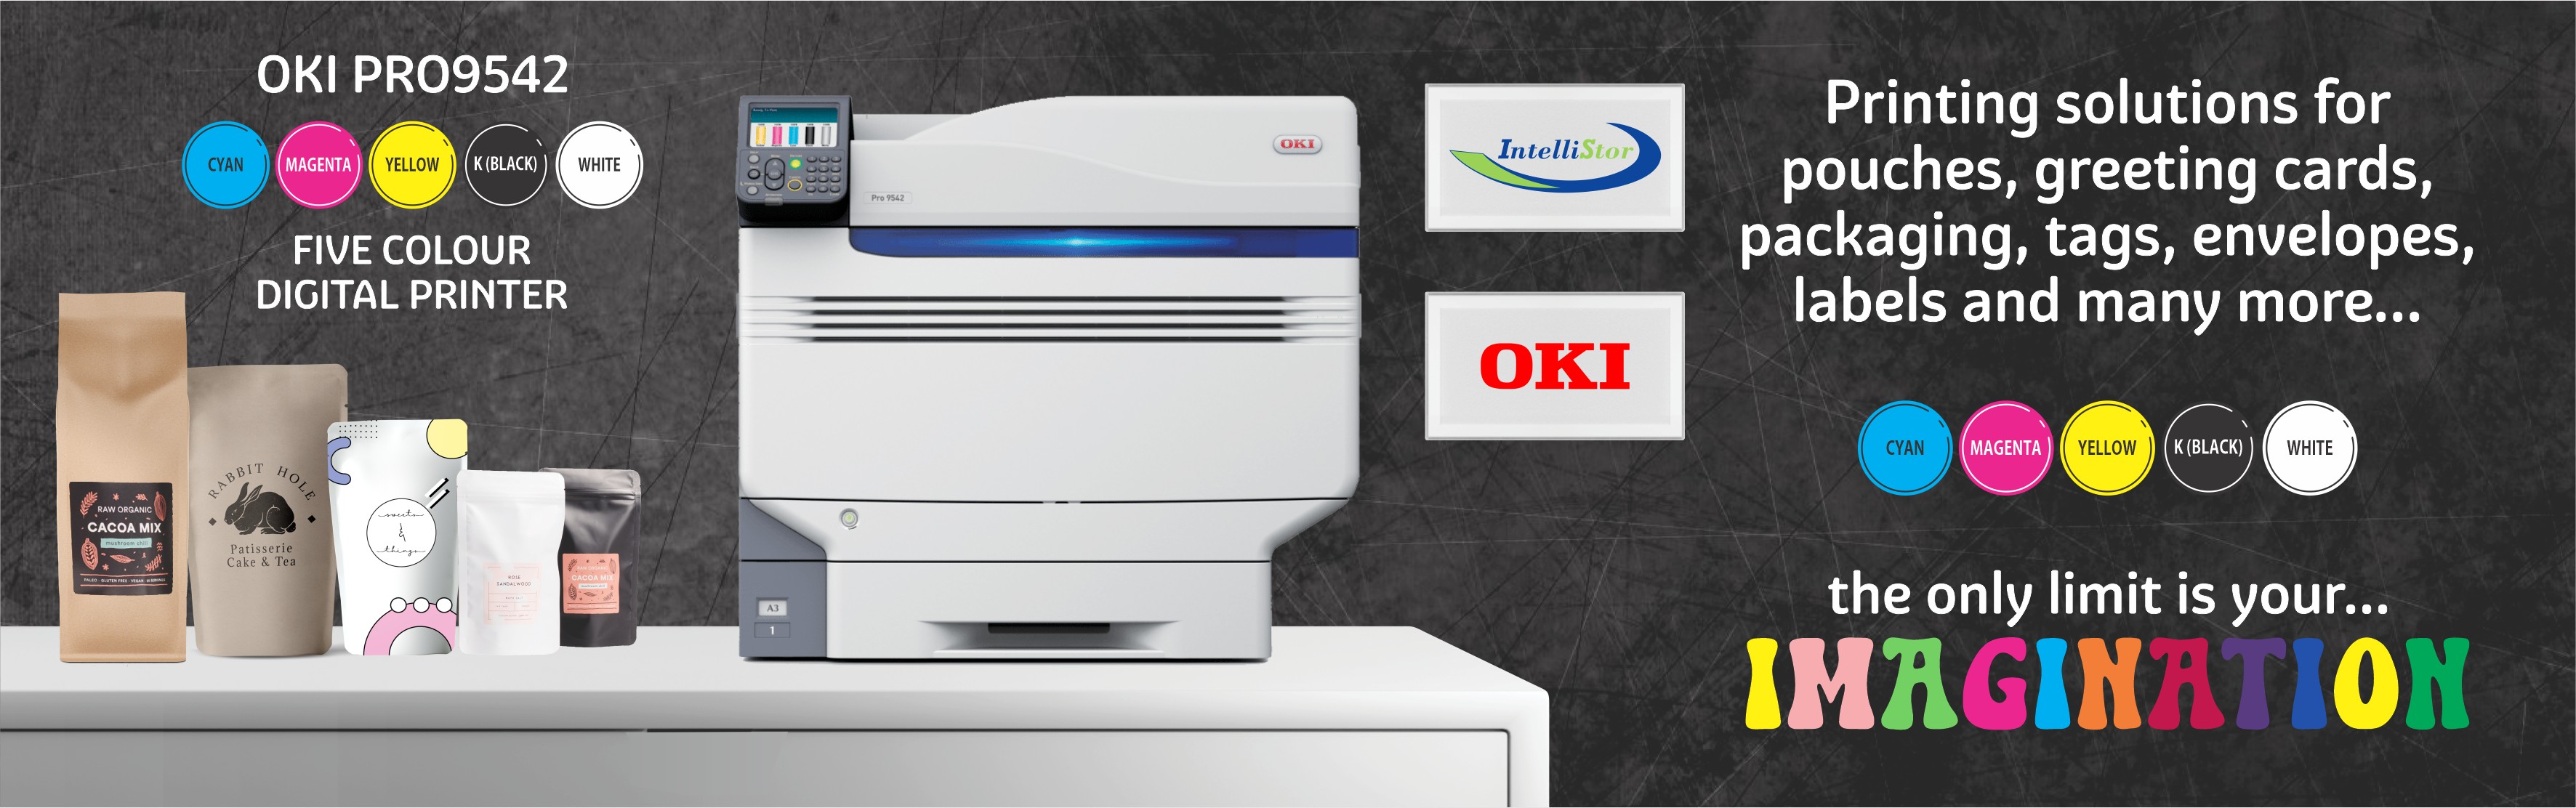 OKI Pro9542 Pouch Printer